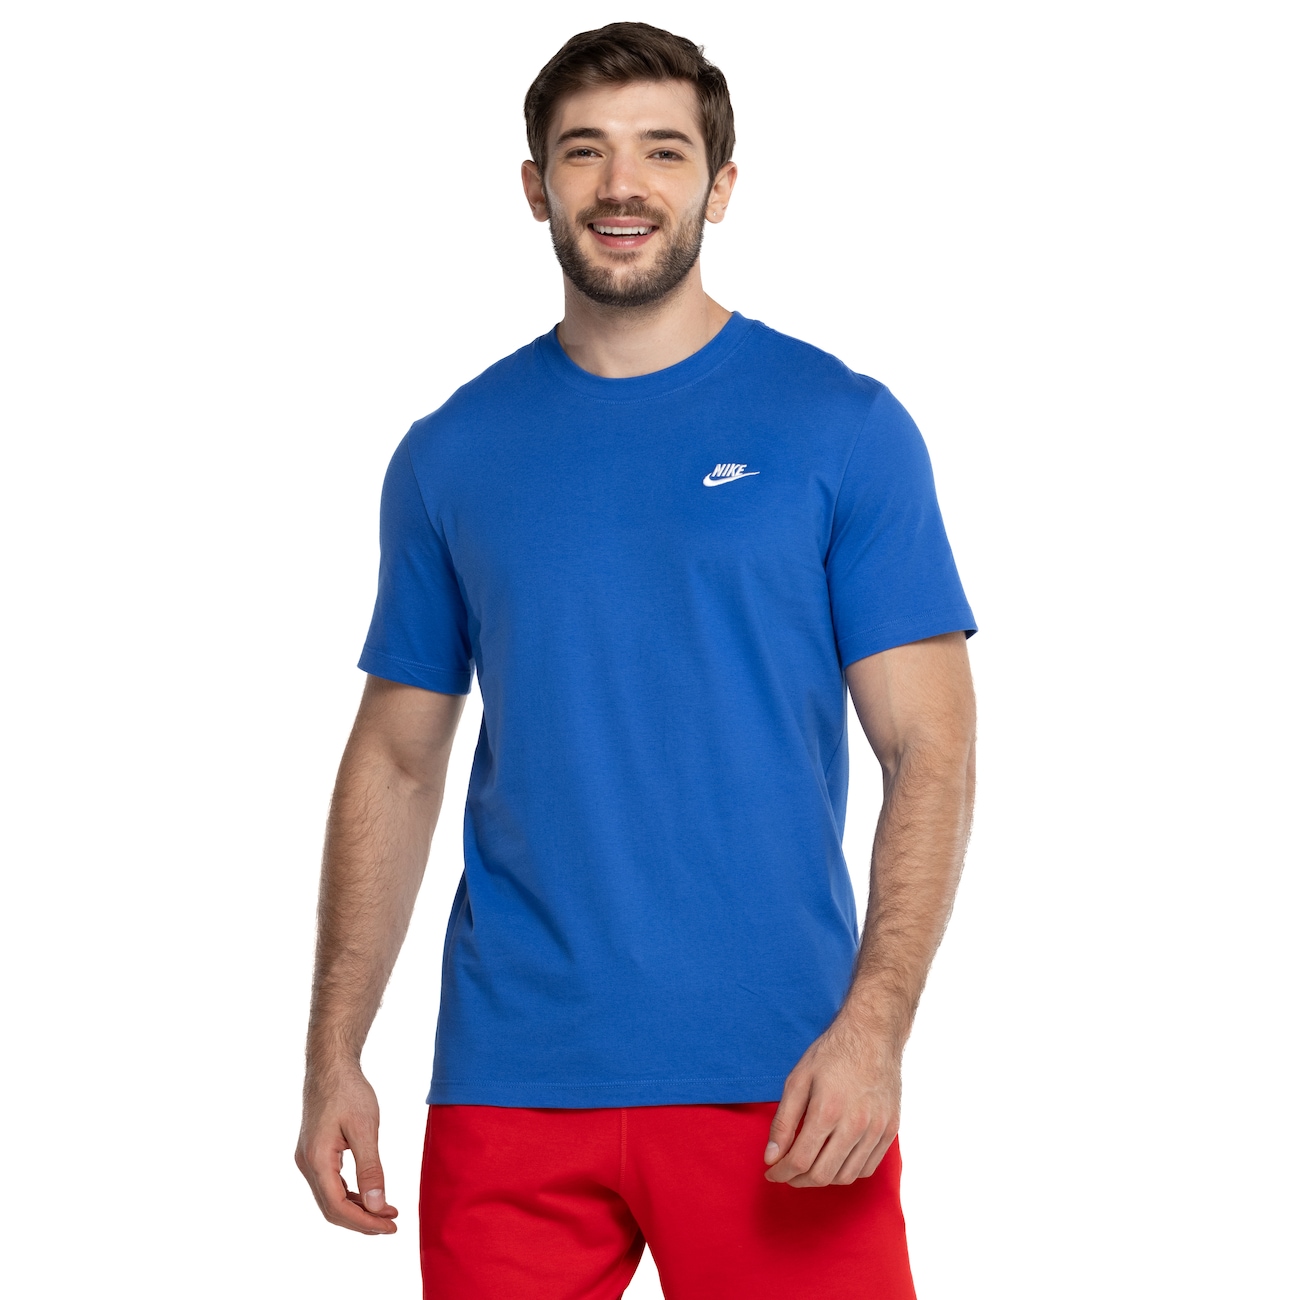 Camiseta Nike Sportwear Club - Masculina